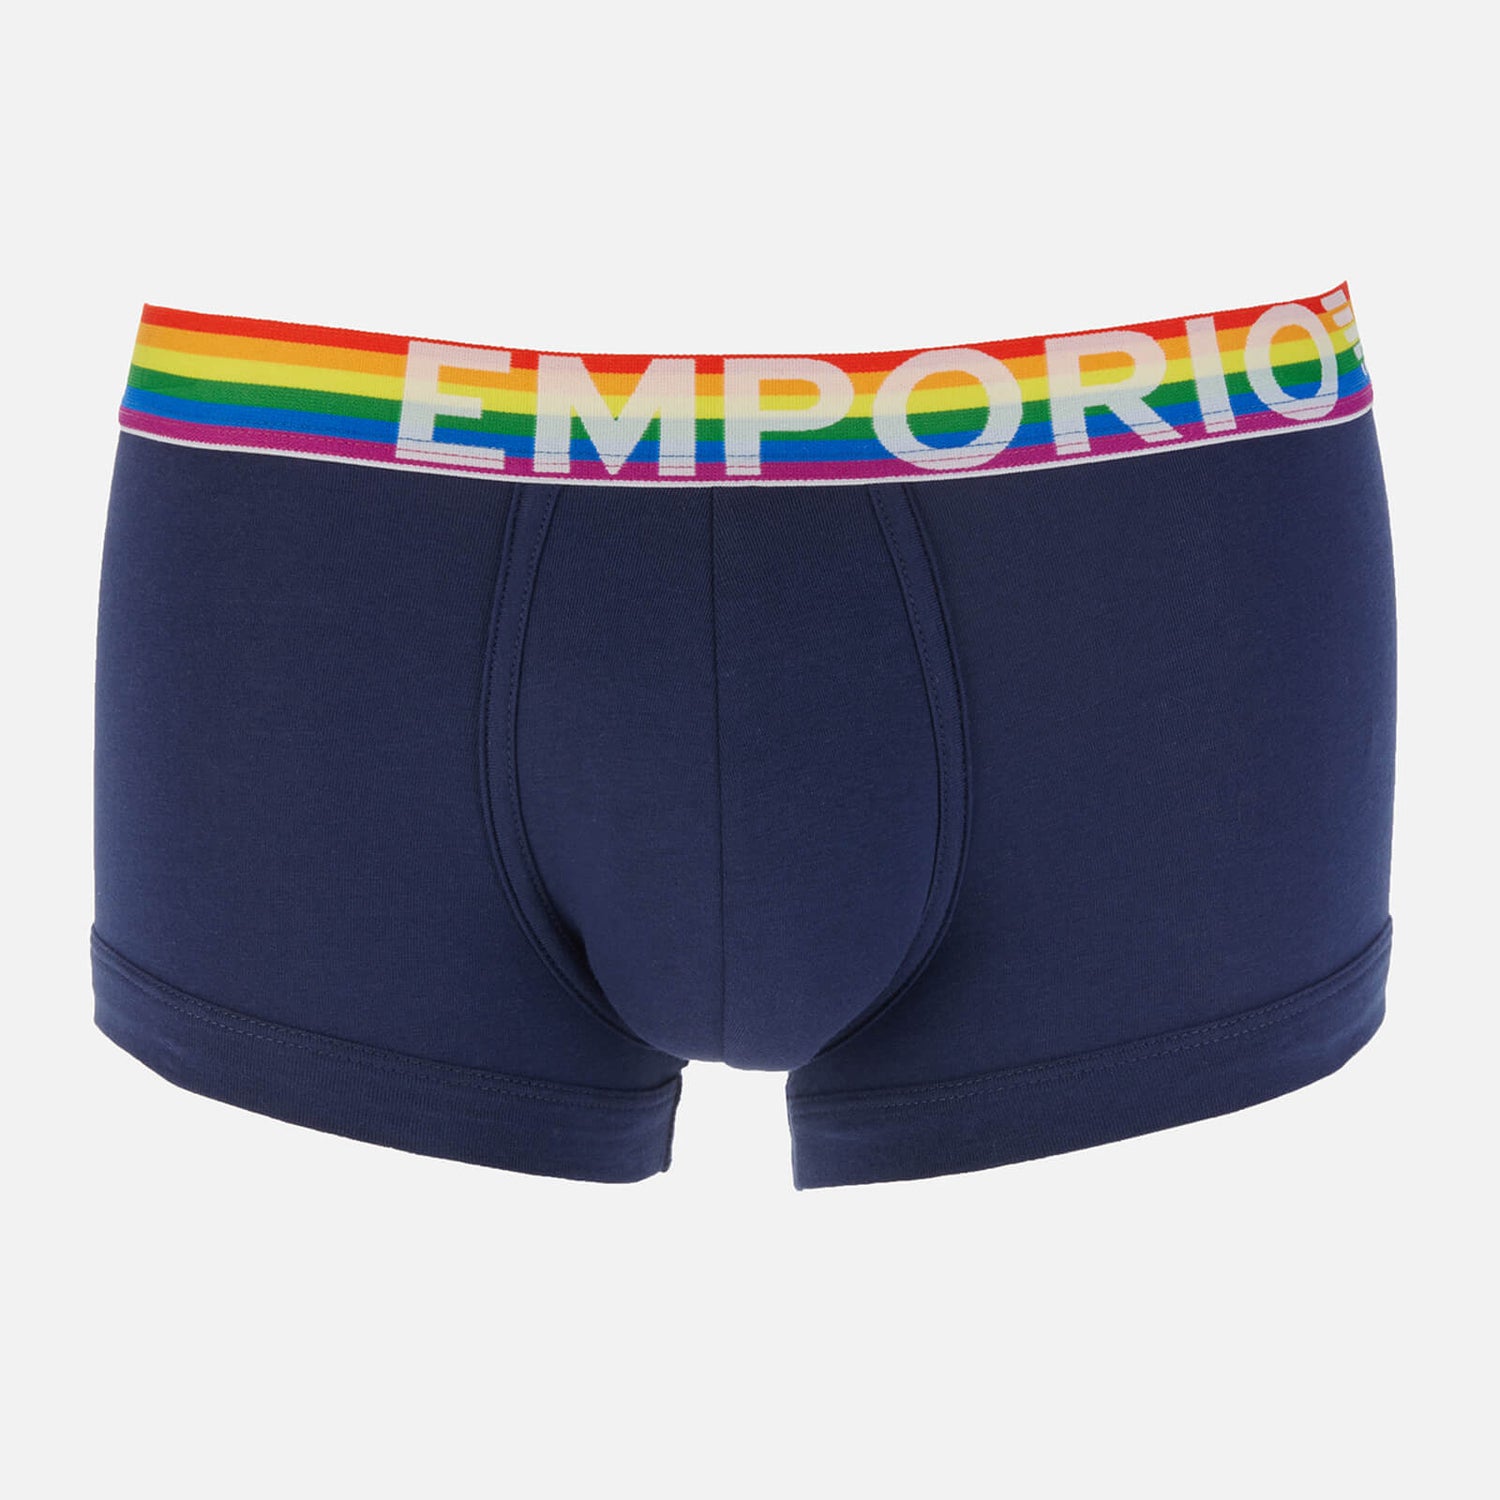 Emporio Armani Men's Rainbow Trunks - Patriot Blue - L